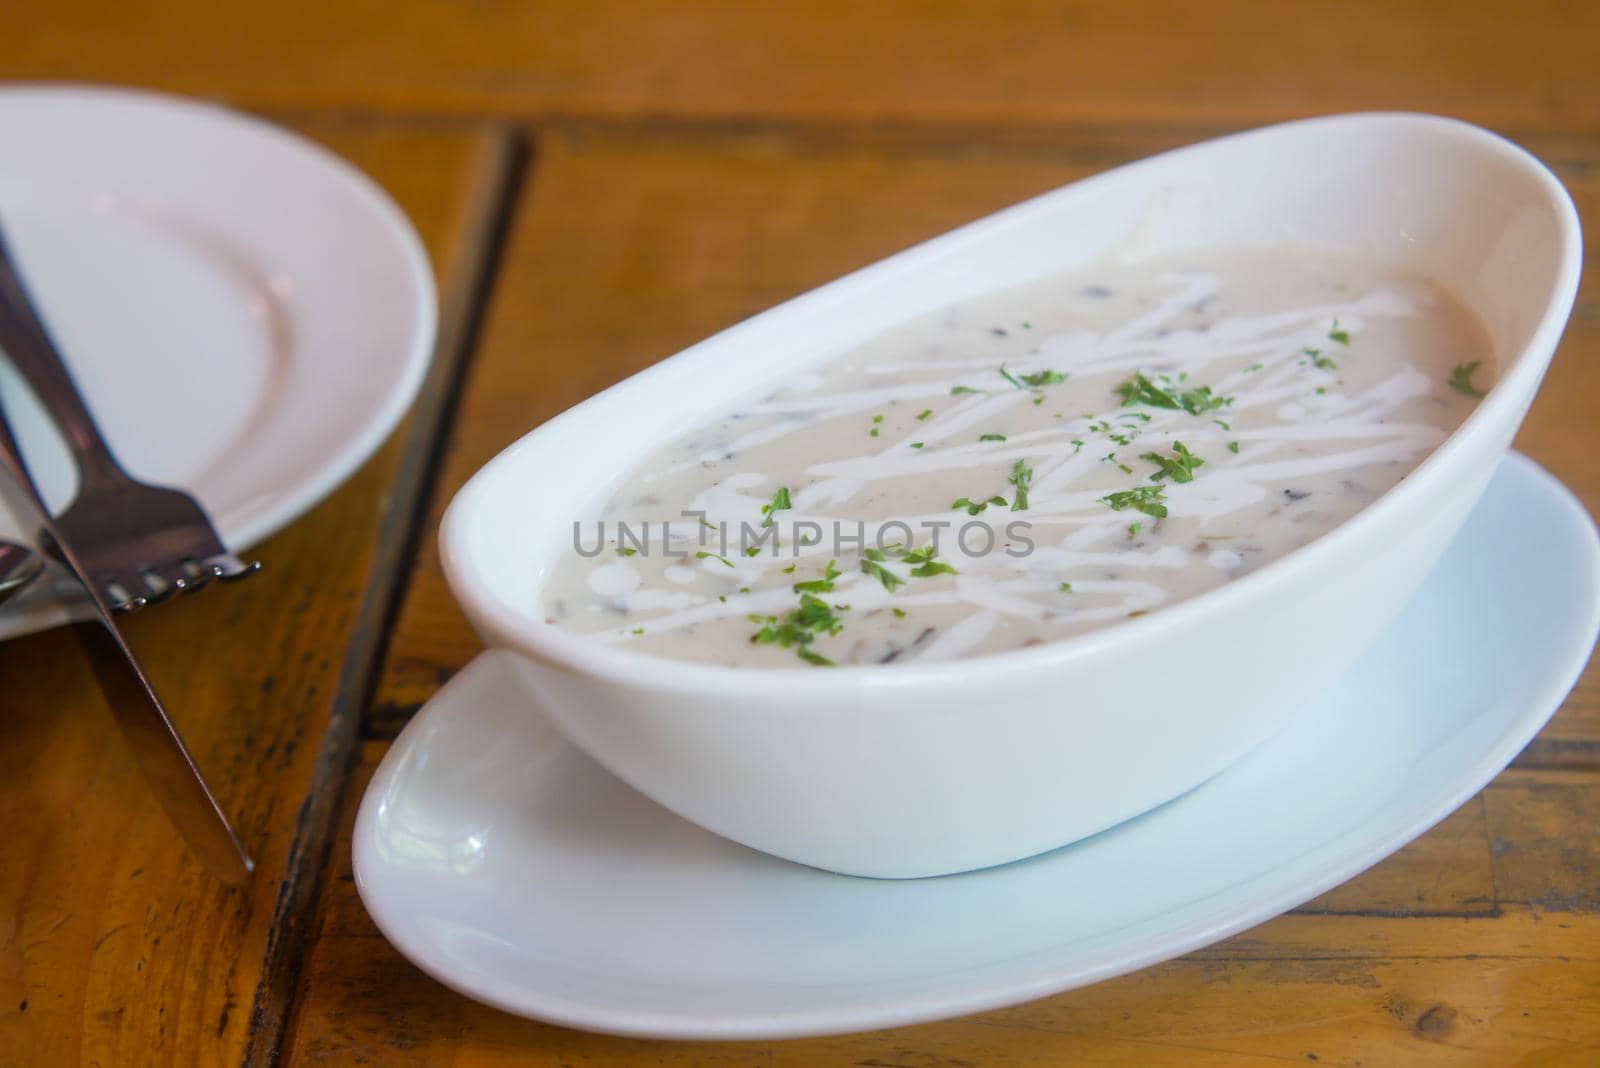 A bowl of homemade cream of mushroom soup by towfiq007